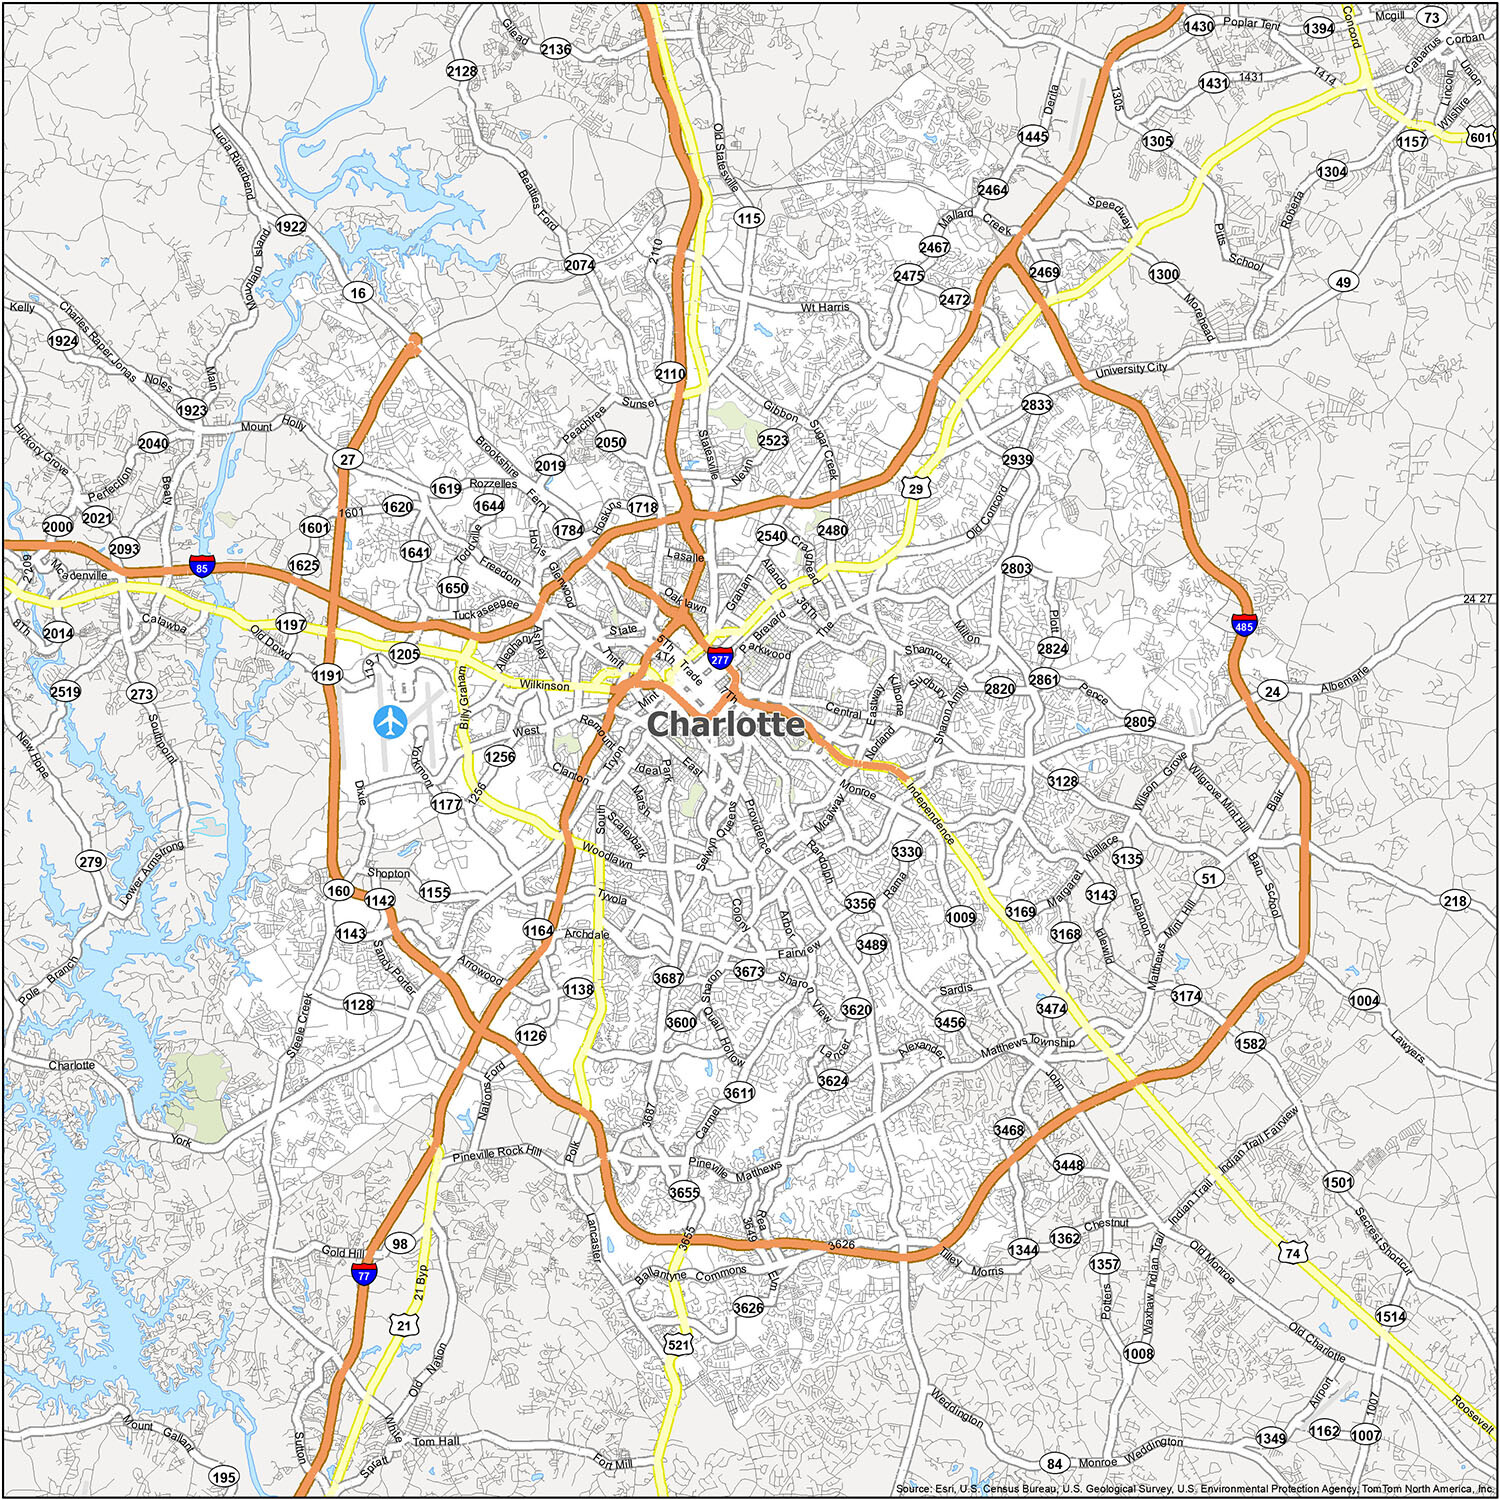 Charlotte Street Map